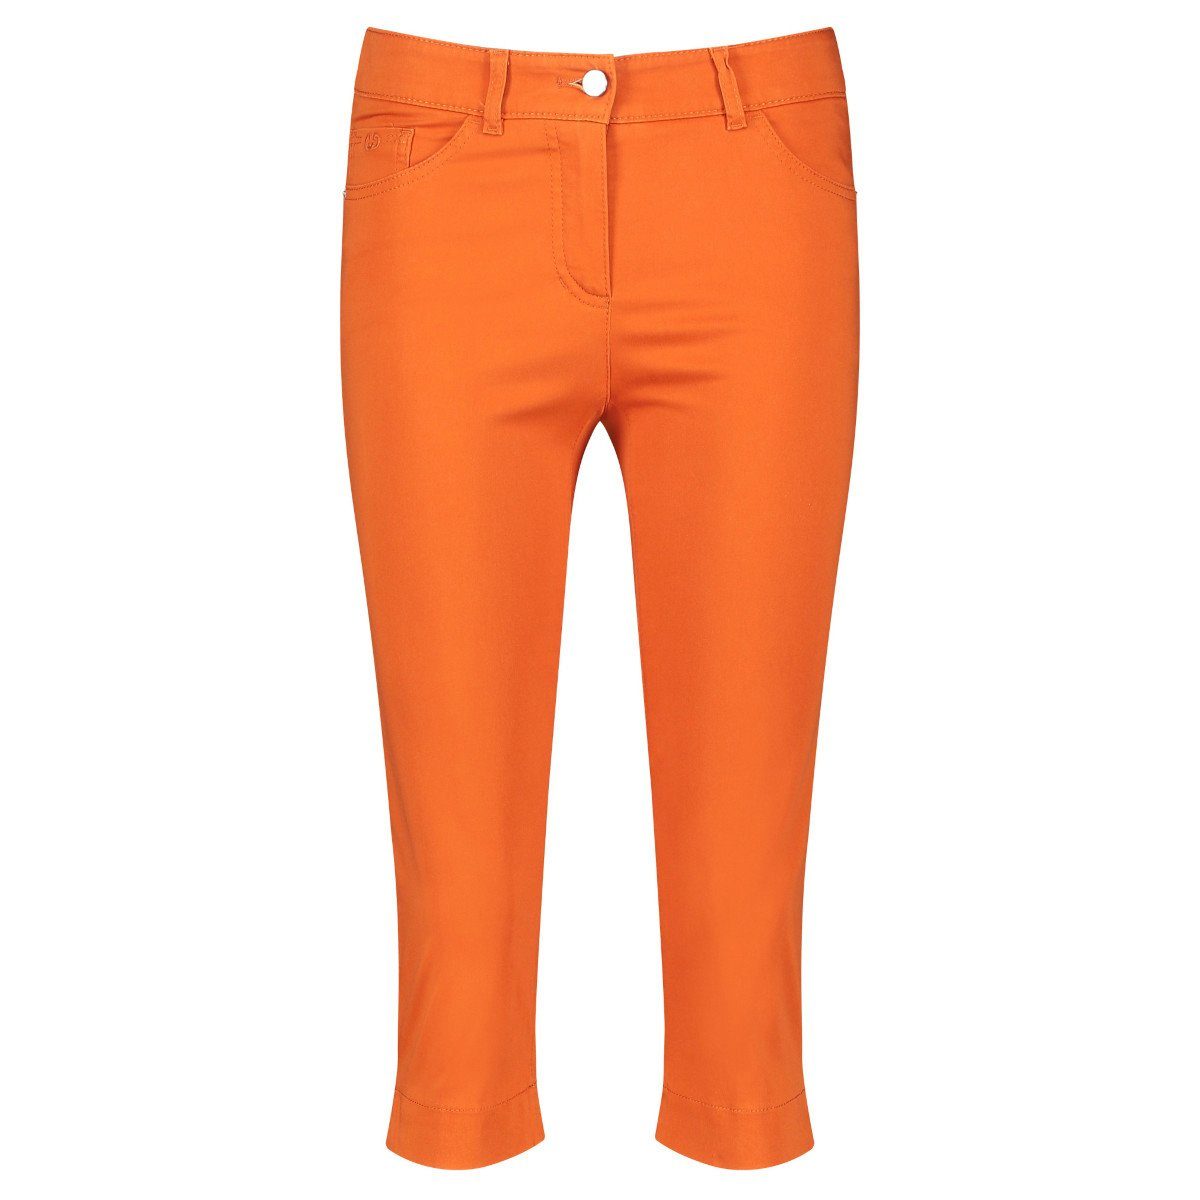 GERRY WEBER Caprijeans Best4ME Capri Burnt 92343-67712 Fit Perfect Orange